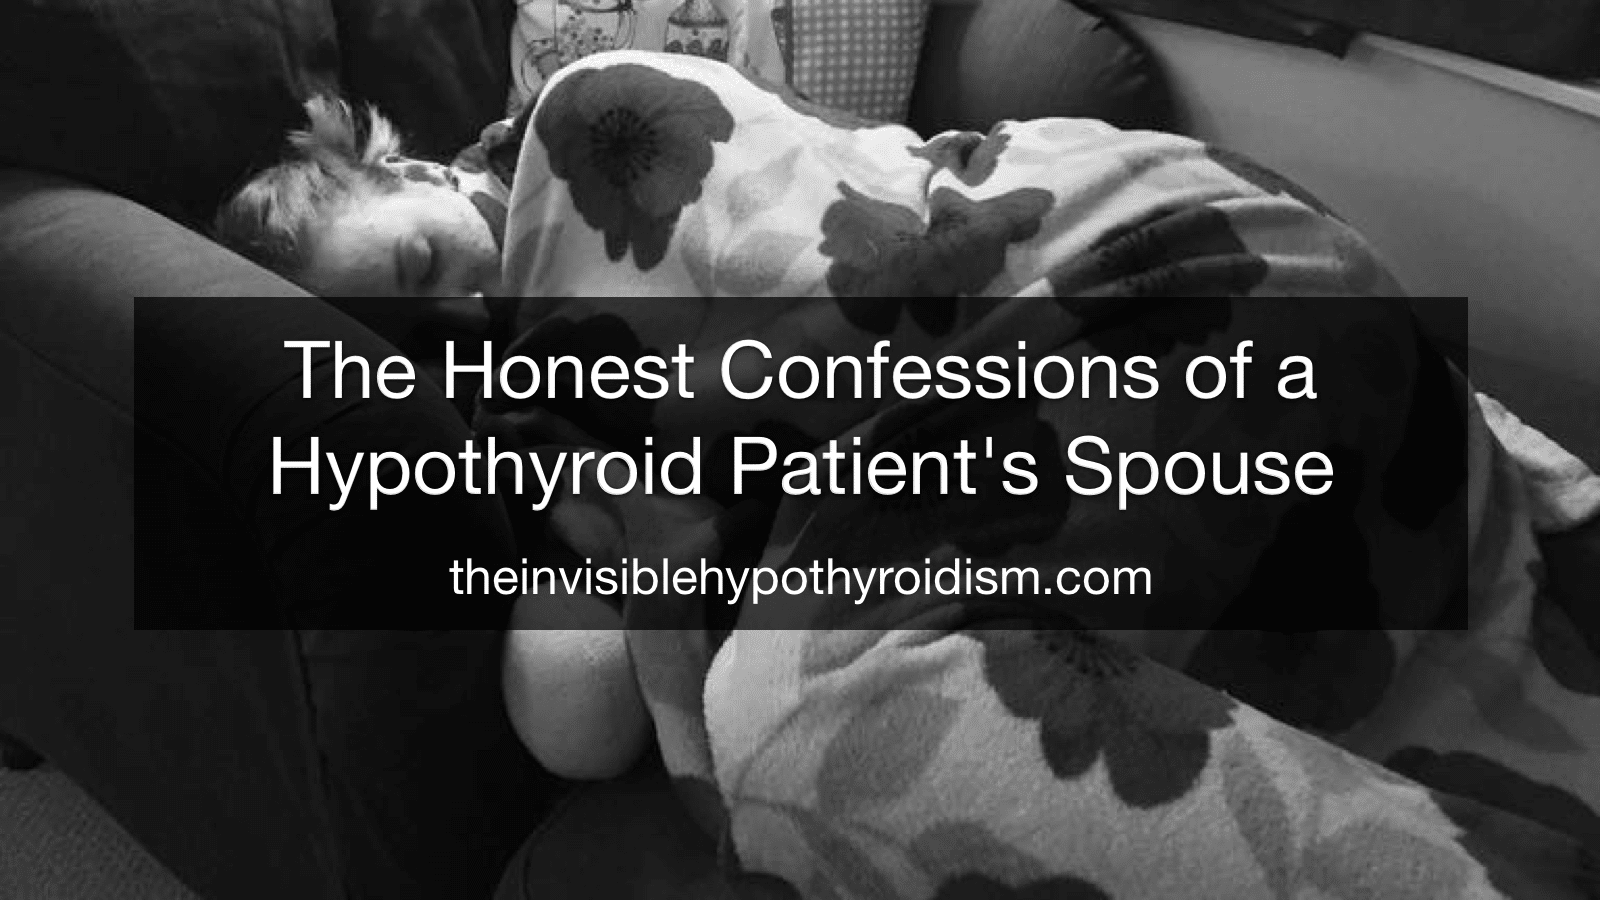 The Honest Confessions of a Hypothyroid Patient's Spouse